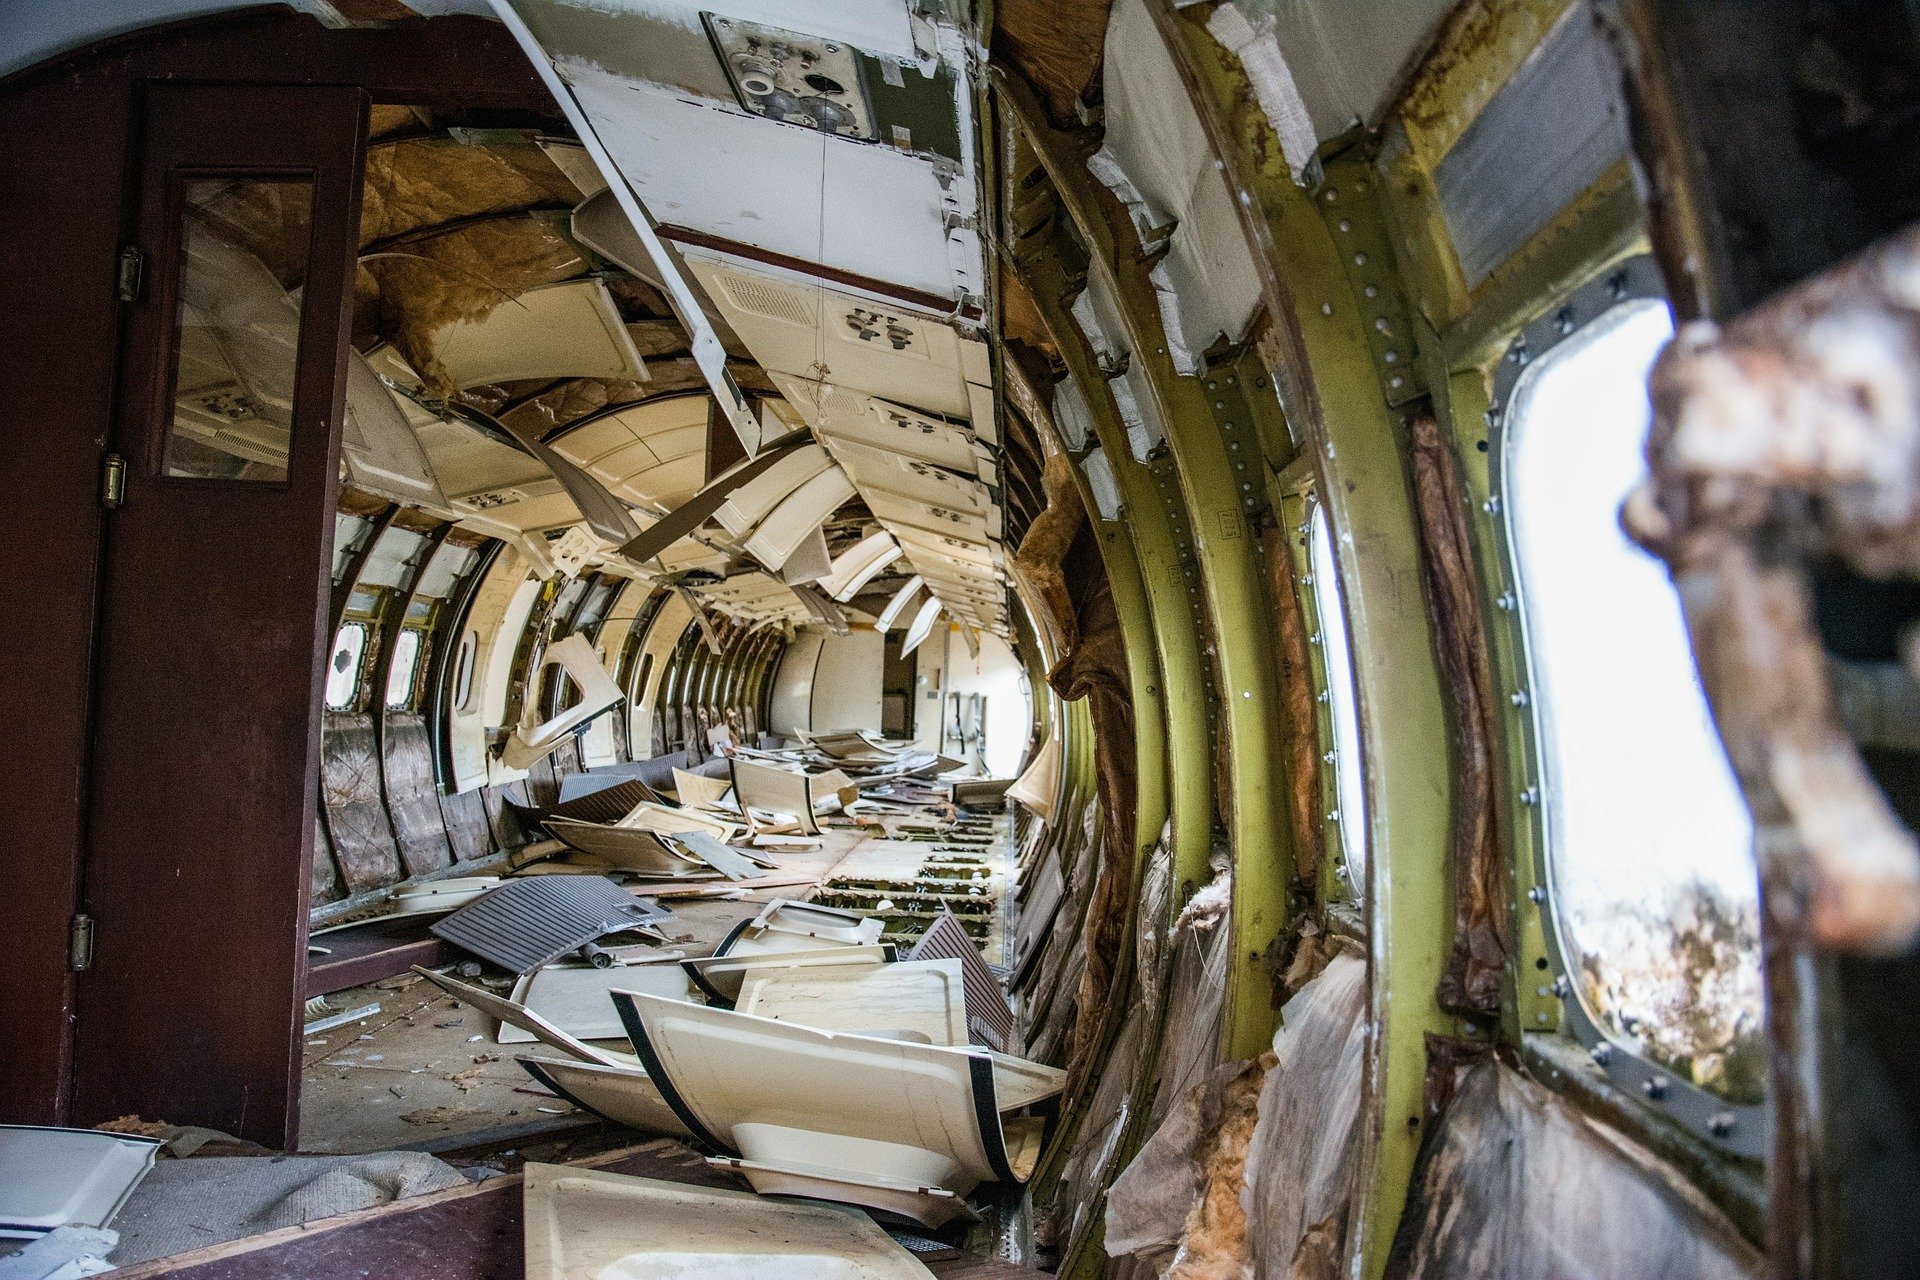 A photo which shows an airplane crash | Source: Pixabay